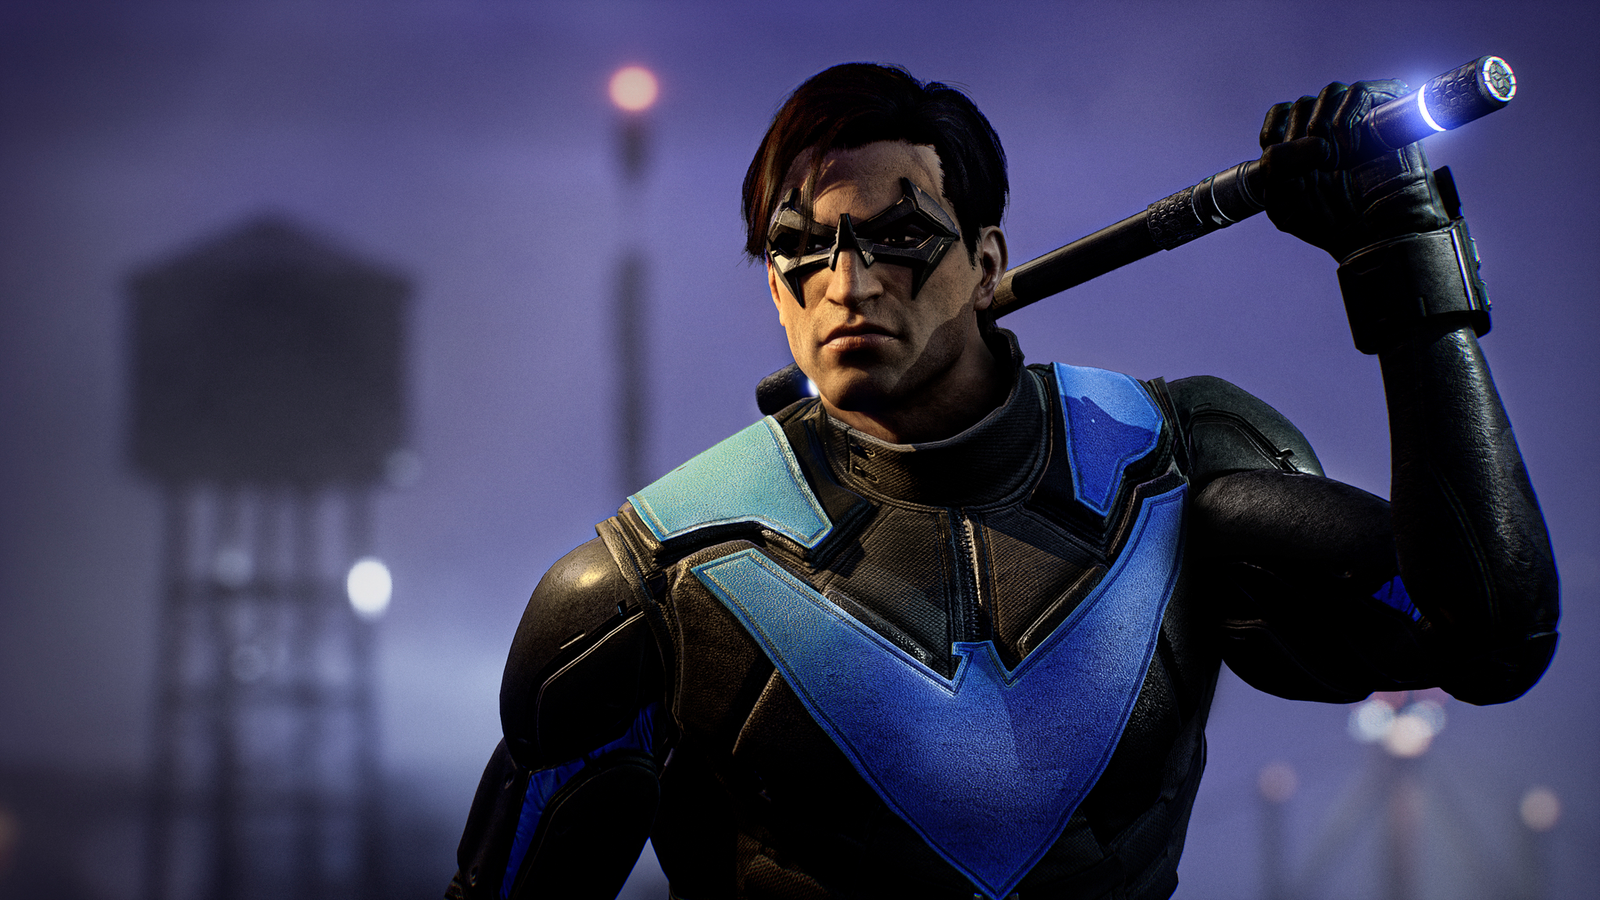 Gotham Knights - Official Gameplay Walkthrough 